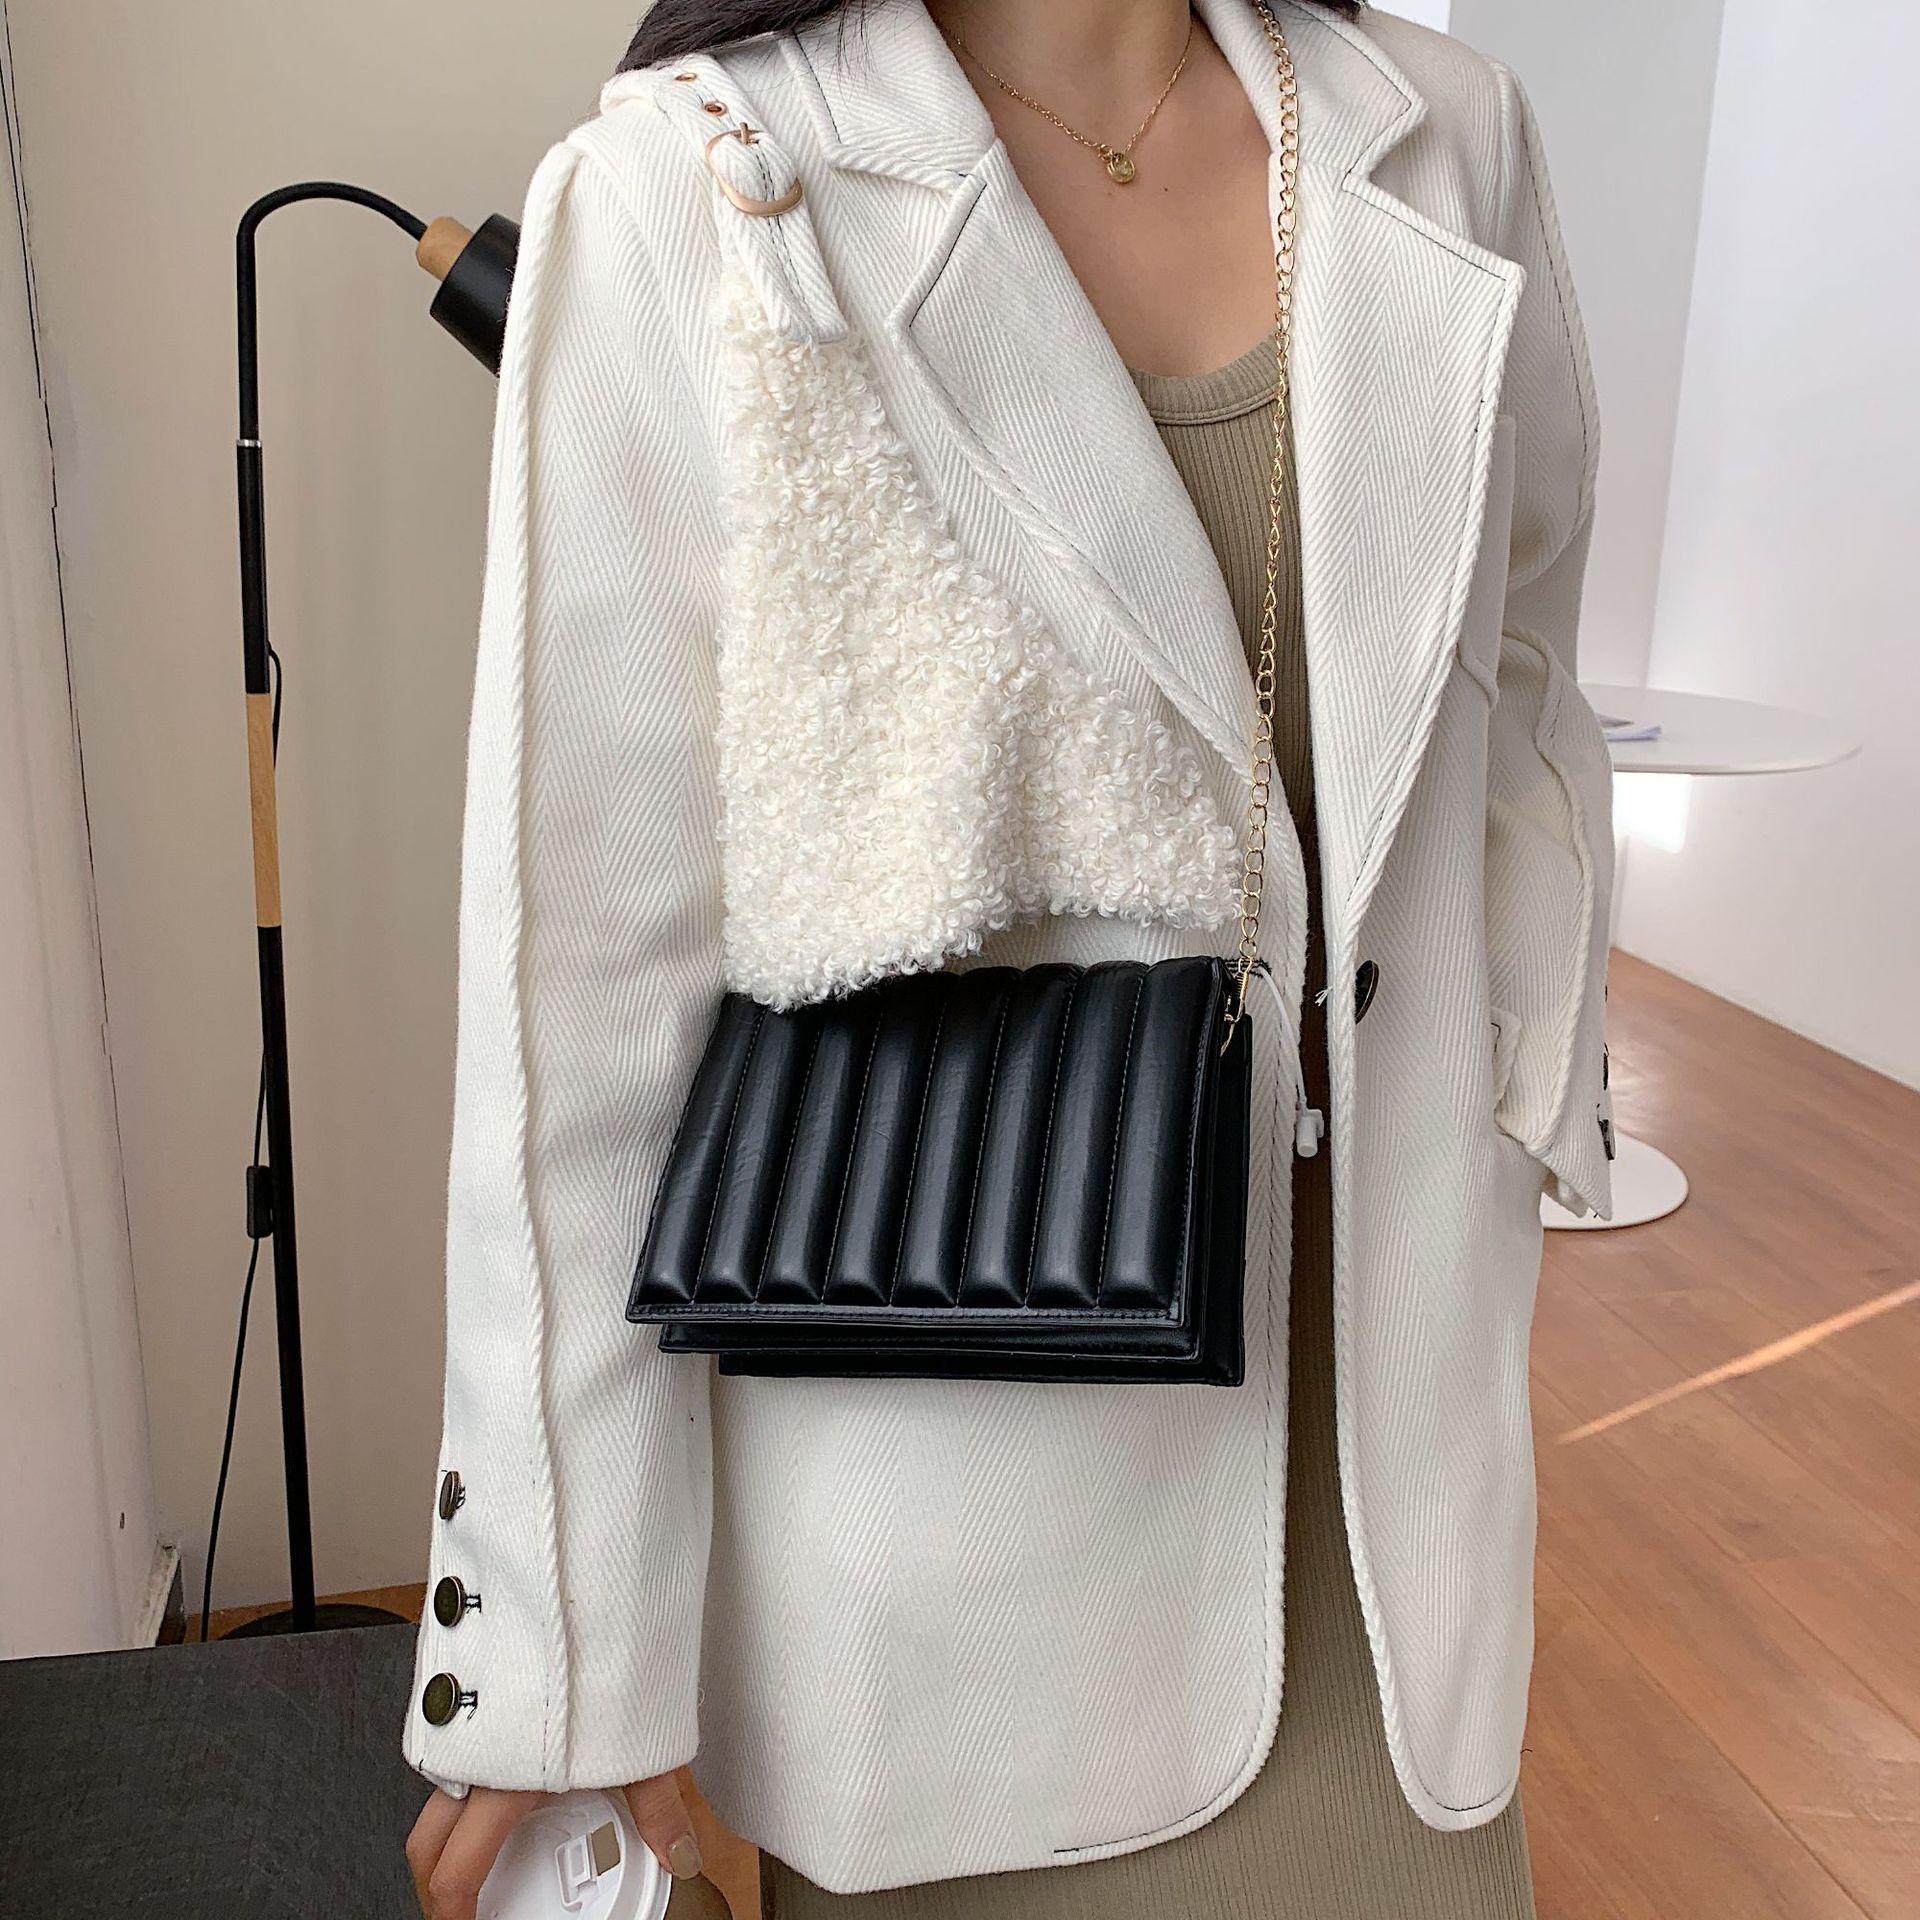 Square Pouch Women's 2020 New Korean Fashion Solid Color Chain Shoulder Bag Simple Stitching Messenger Bag